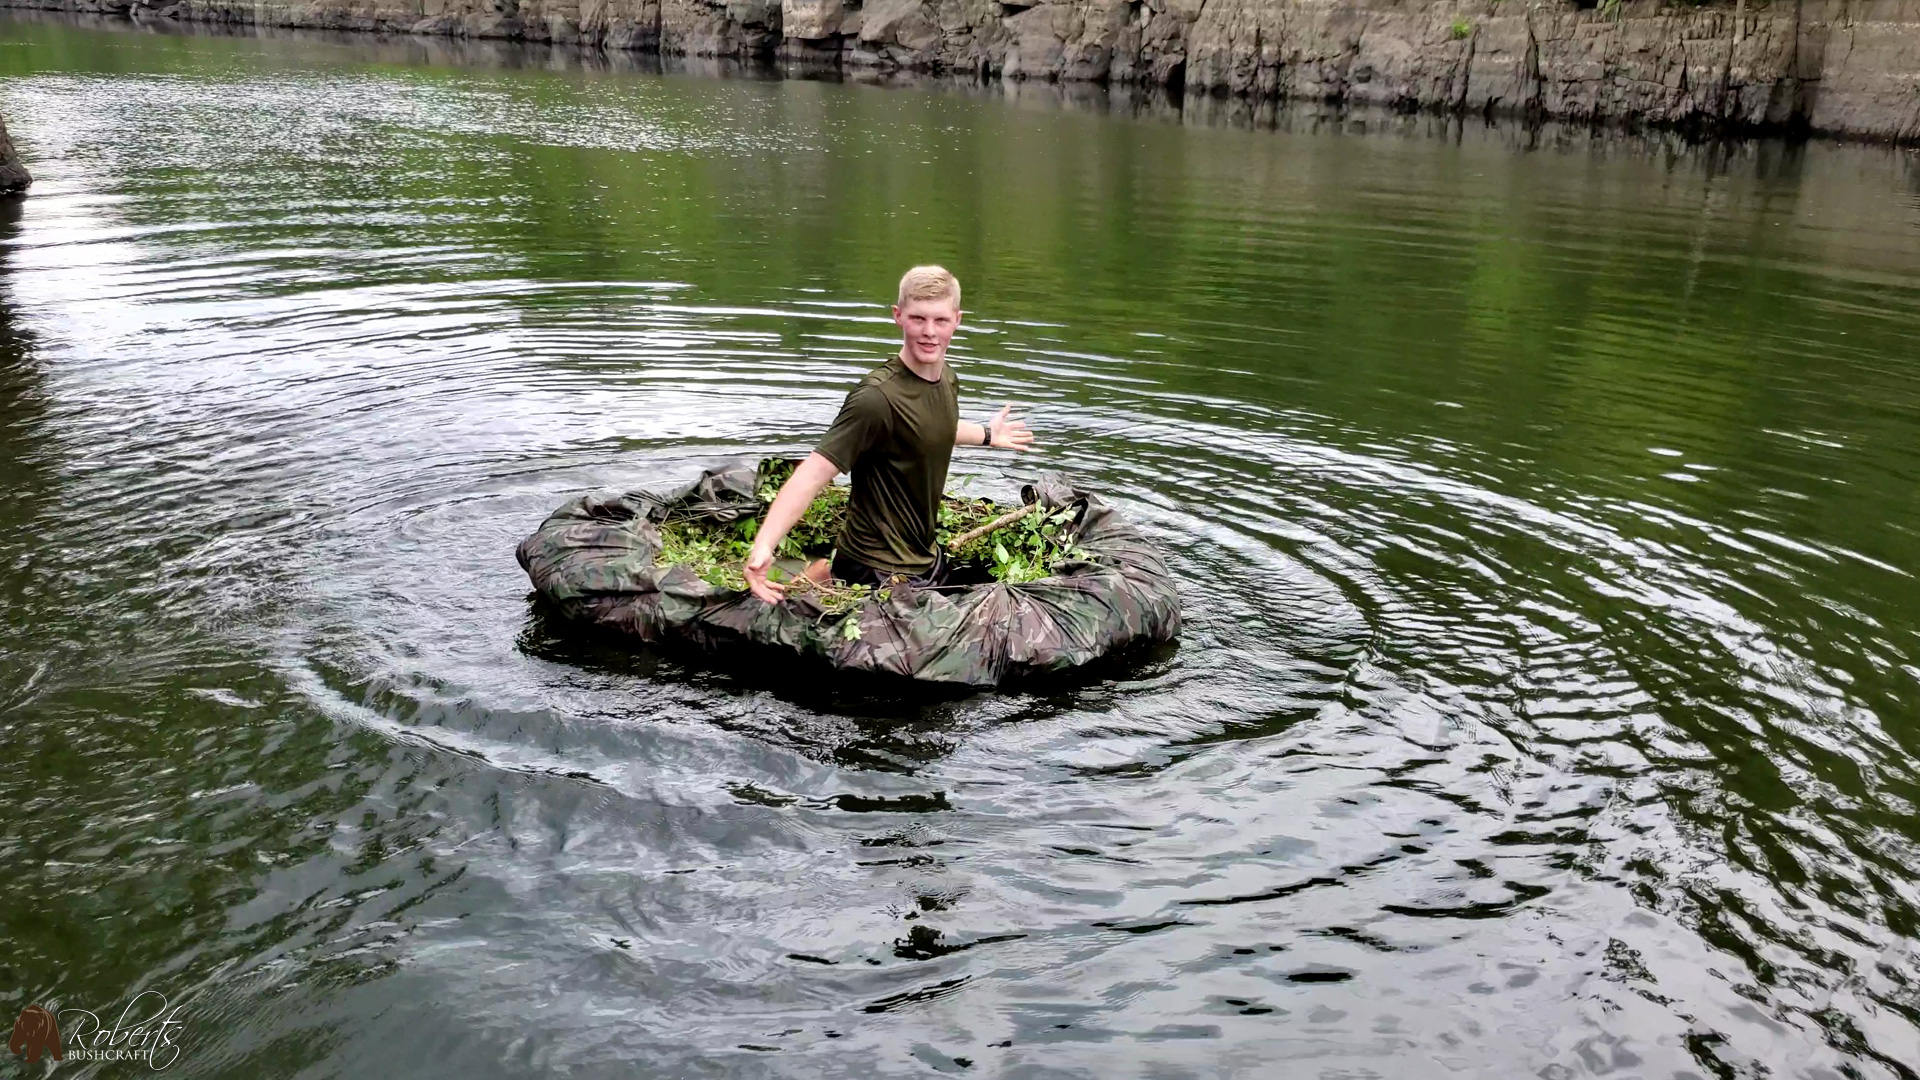 paddling survival raft across the river